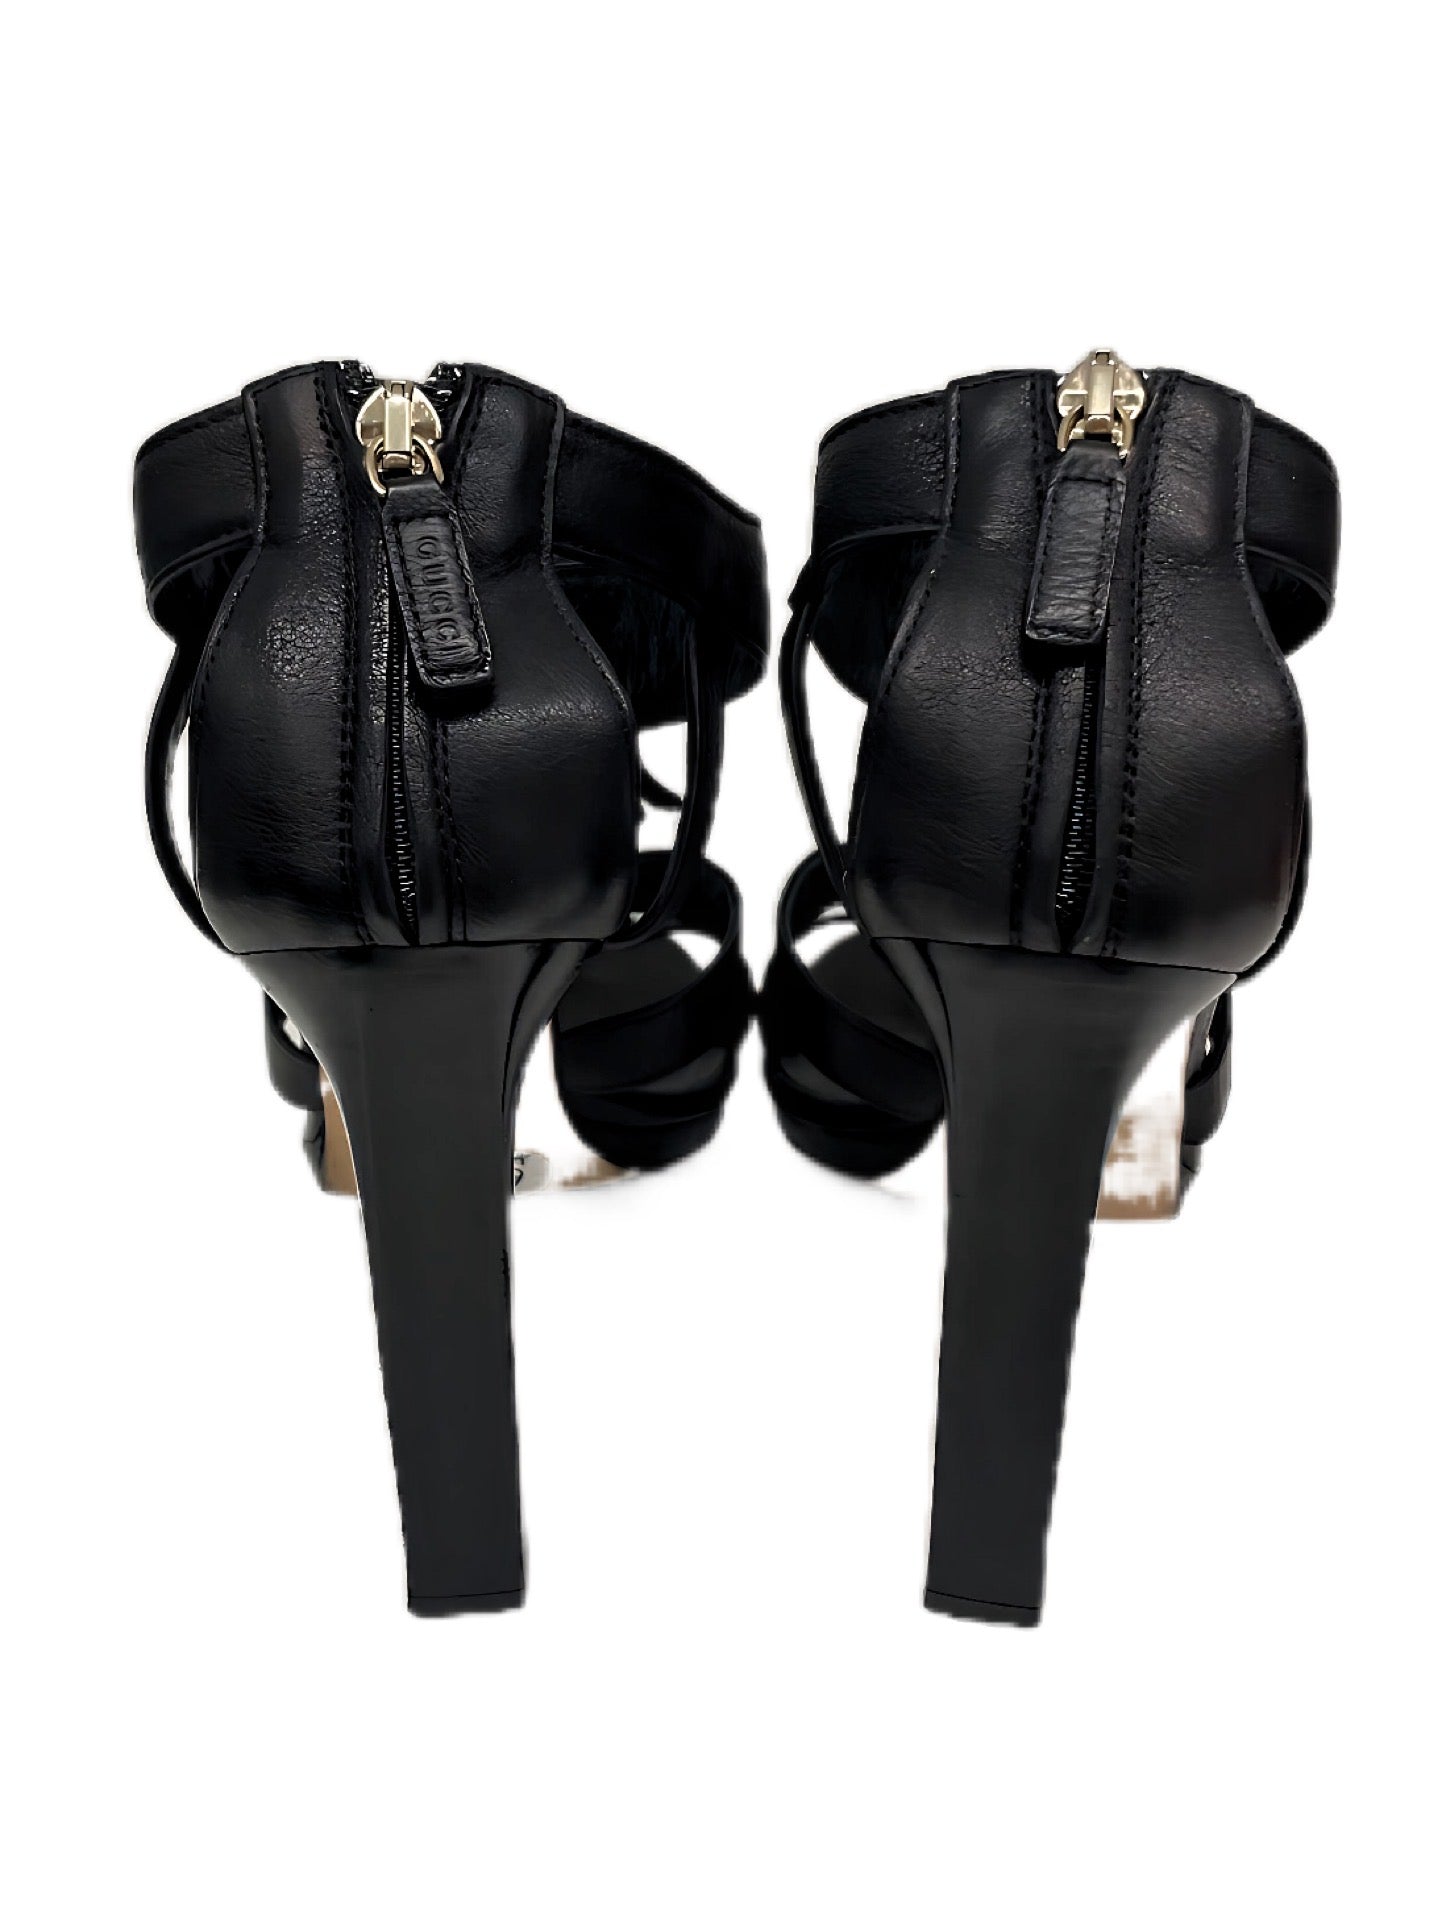 Gucci Black Sandals. Size: 40